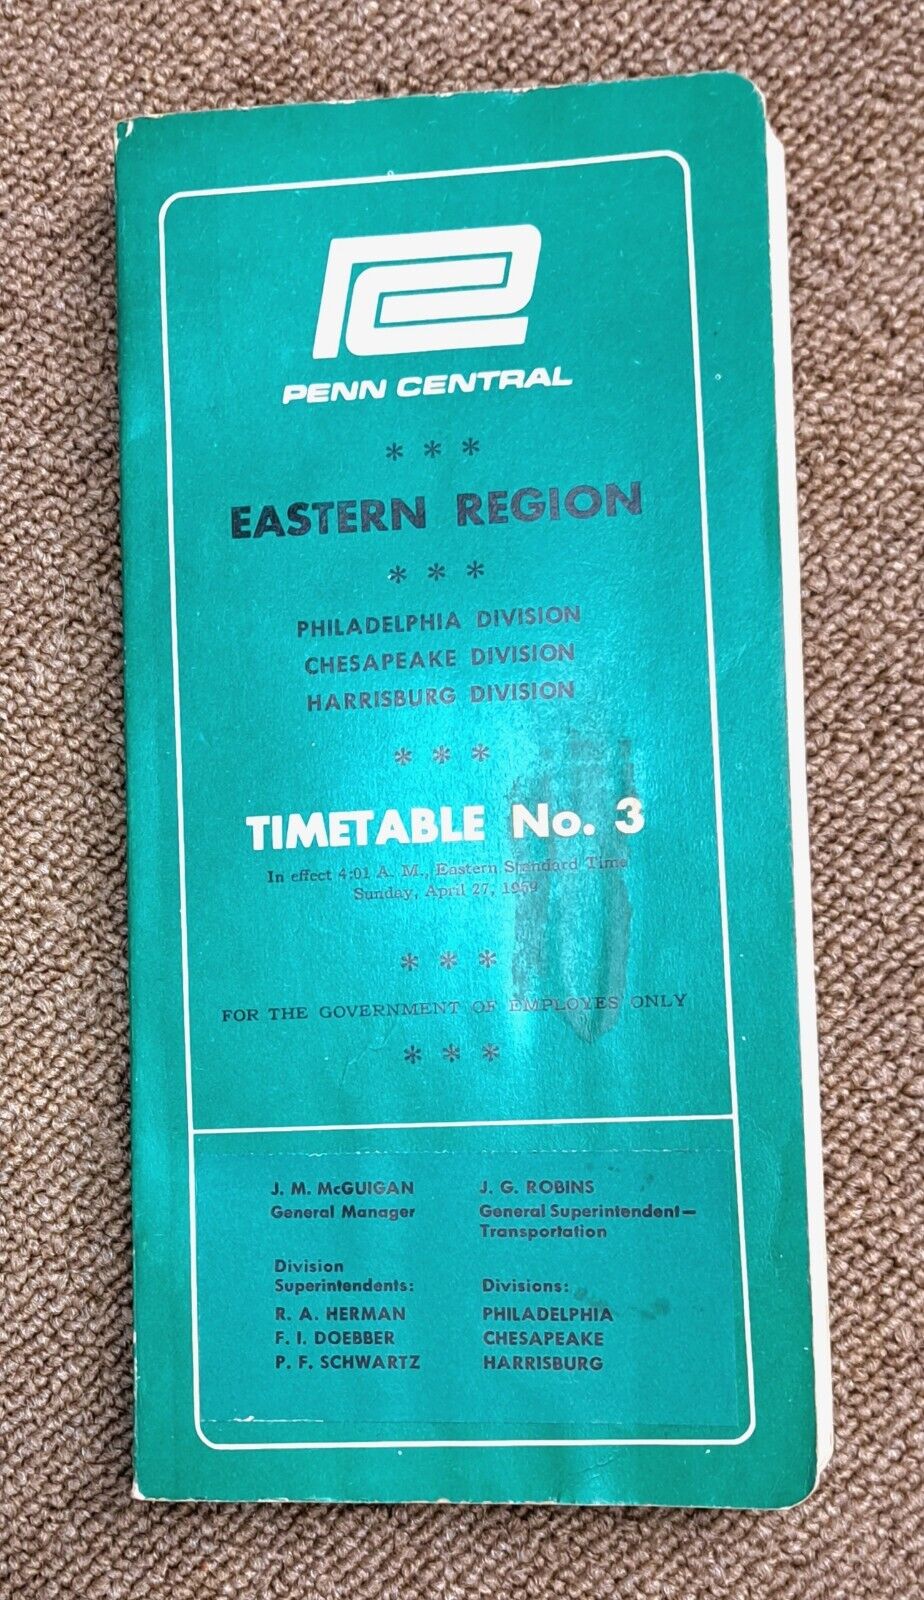 Penn Central 1969 Eastern Region Employee Timetable #3